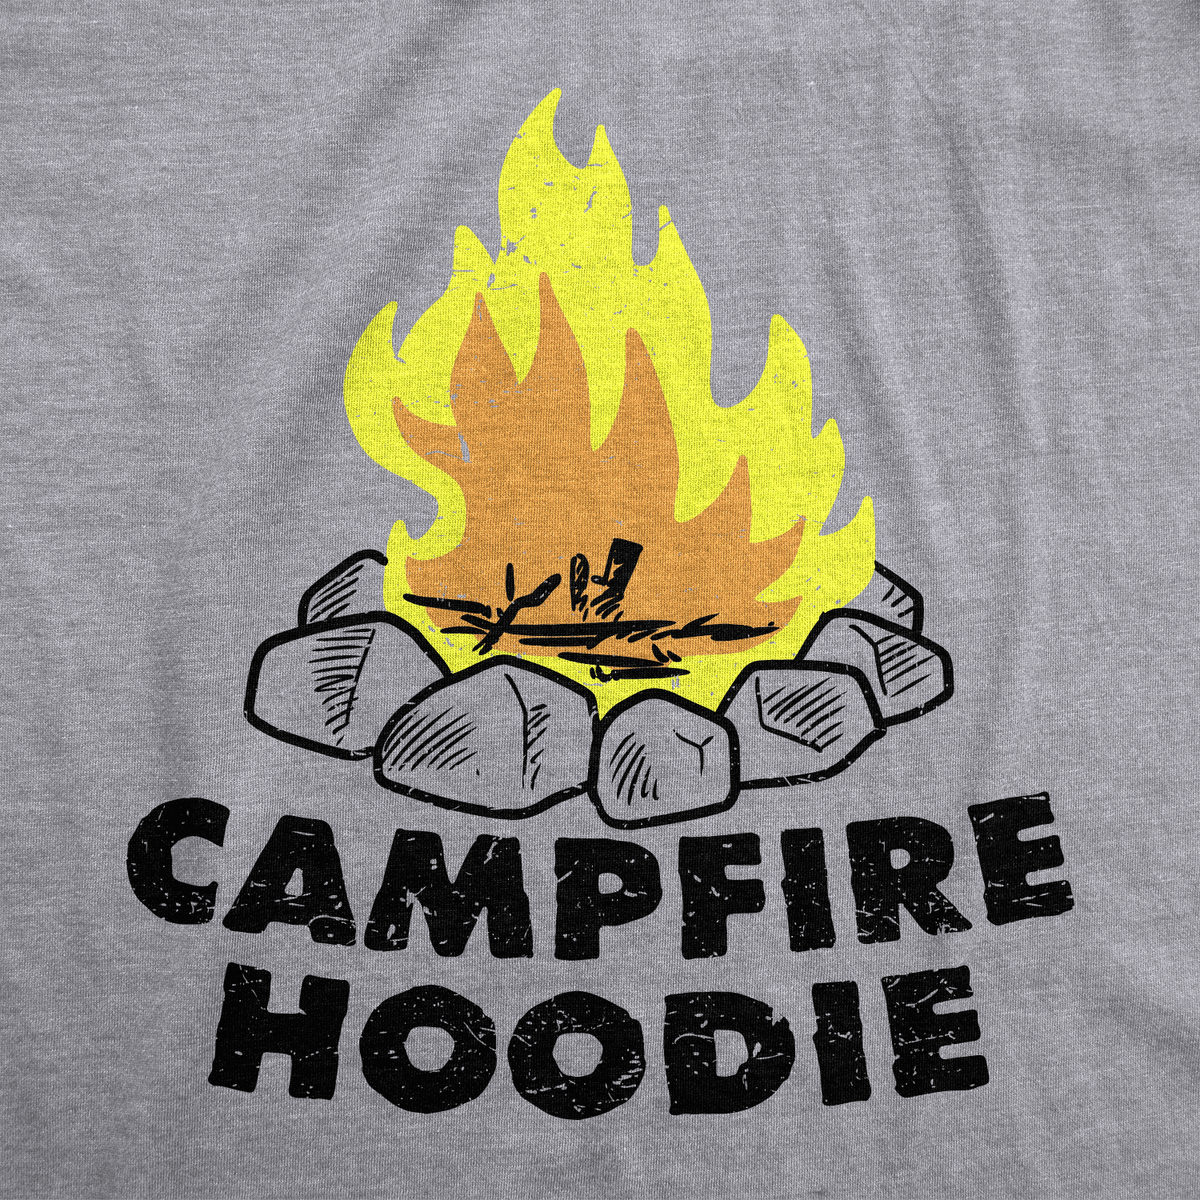 Campfire Hoodie